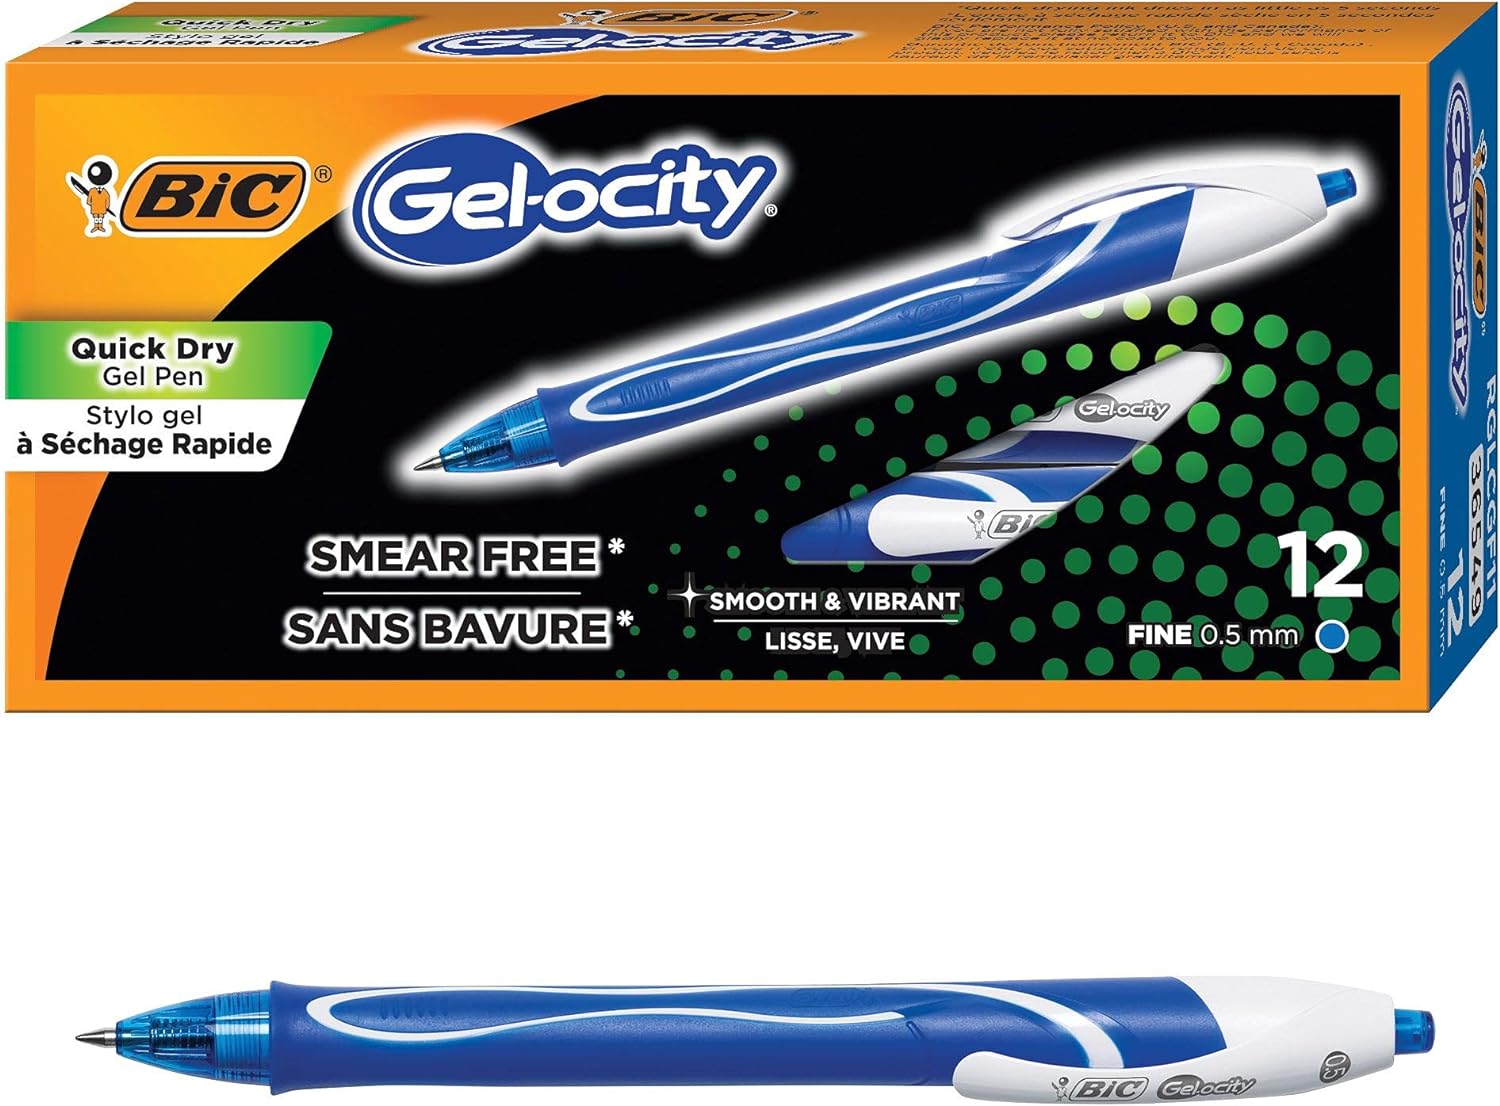 BIC Gel-ocity Quick Dry Gel Pen, Fine Point (0.5mm) - Box of 12 Blue Gel Pens (RGLCGF11-BLU)